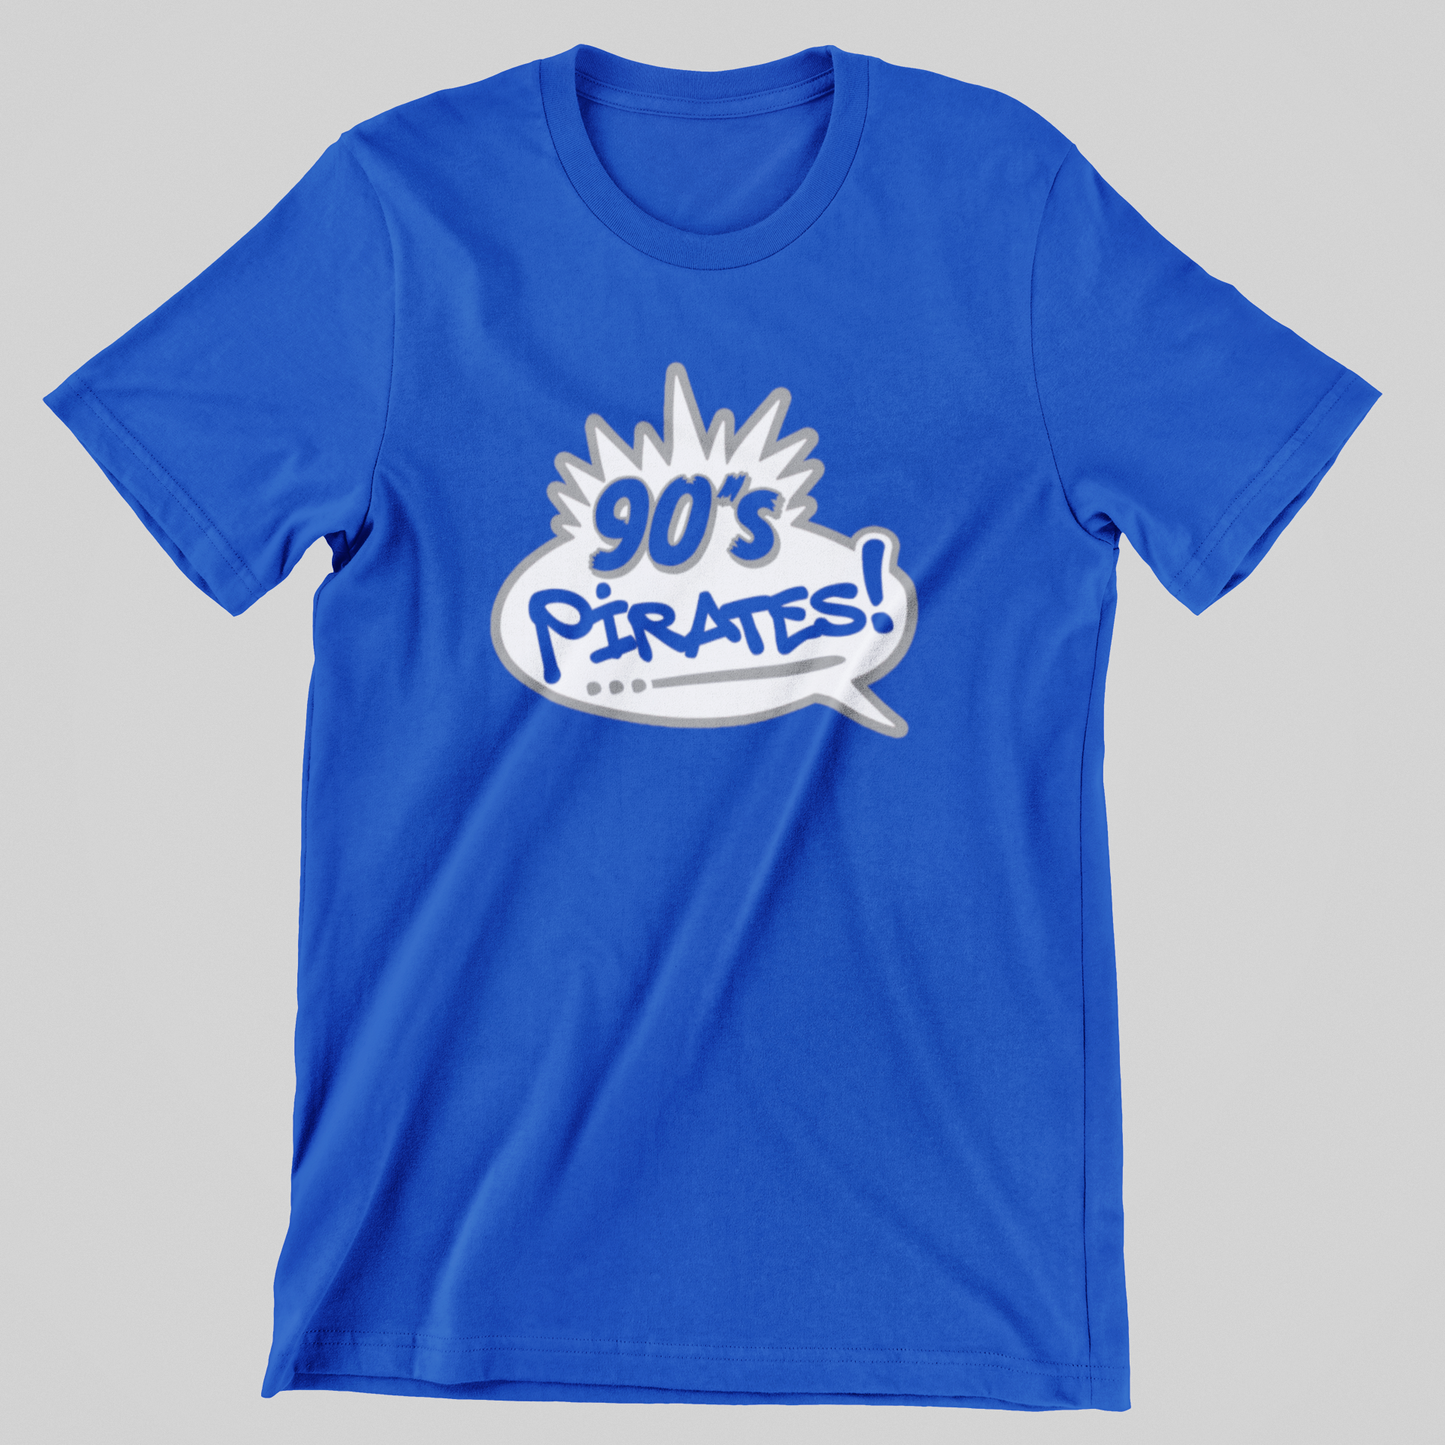 90s Pirates T-shirt (HU)